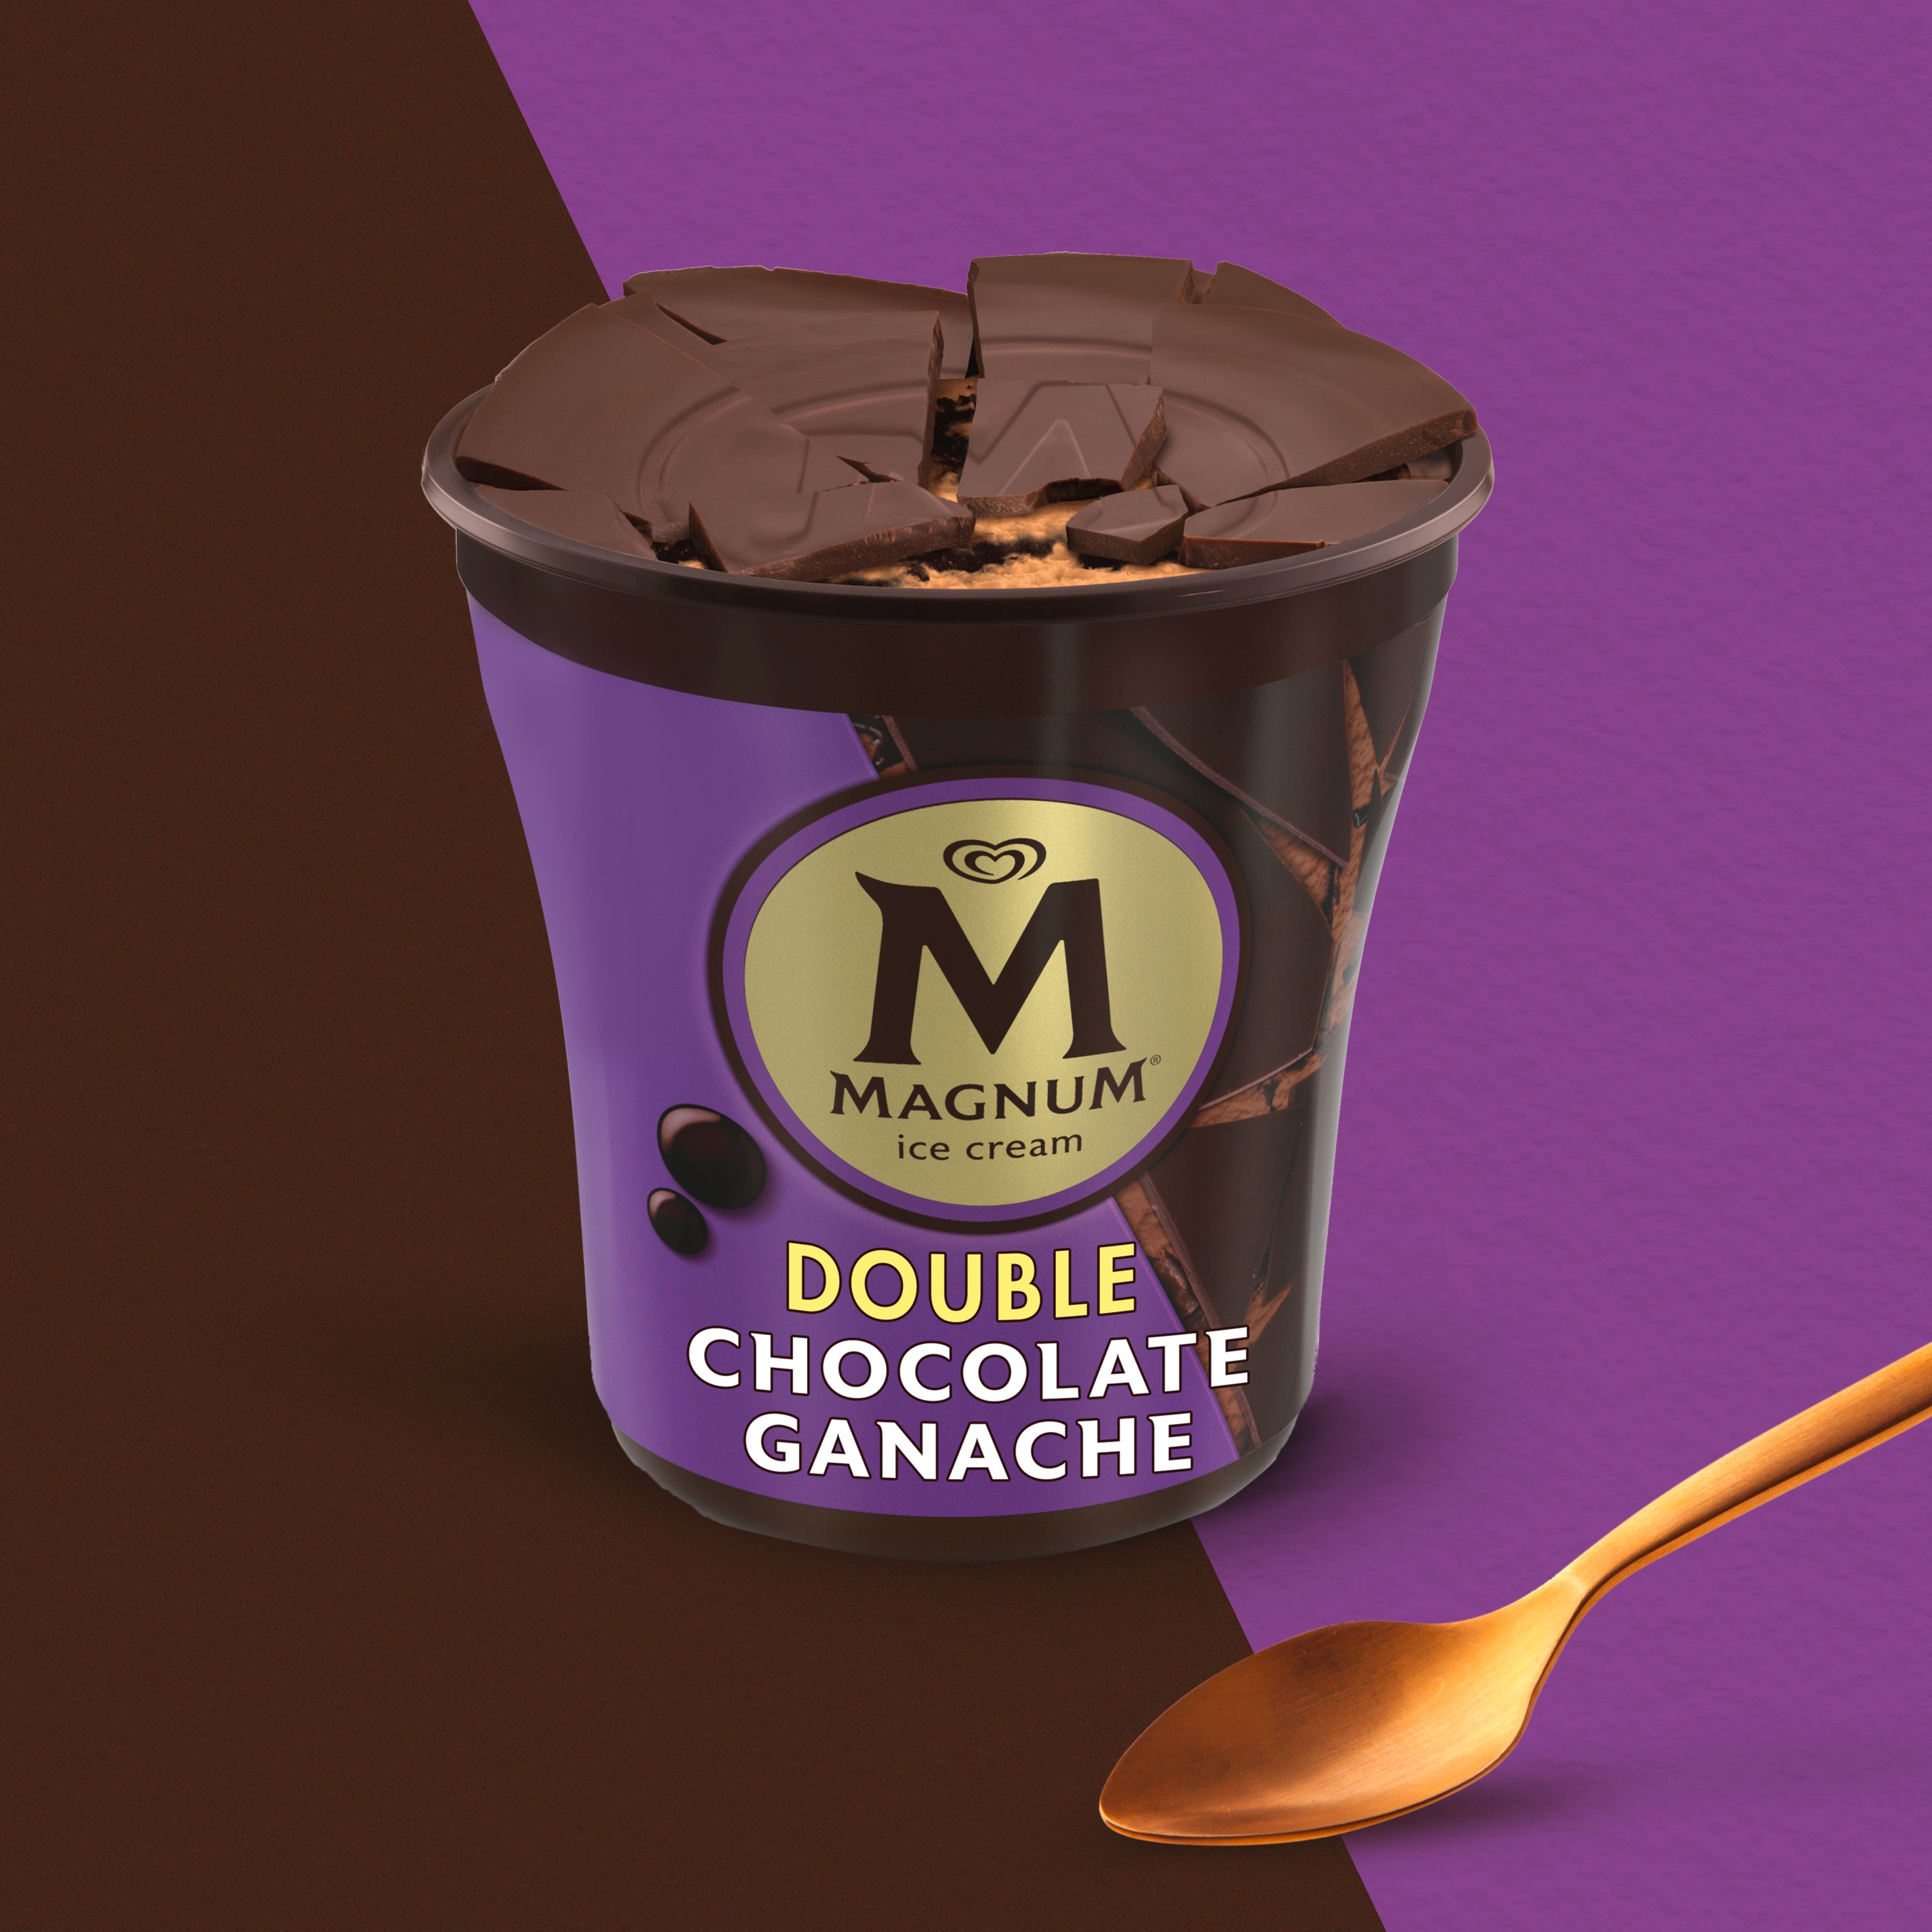 Double Chocolate and Ganache Ice Cream Tub